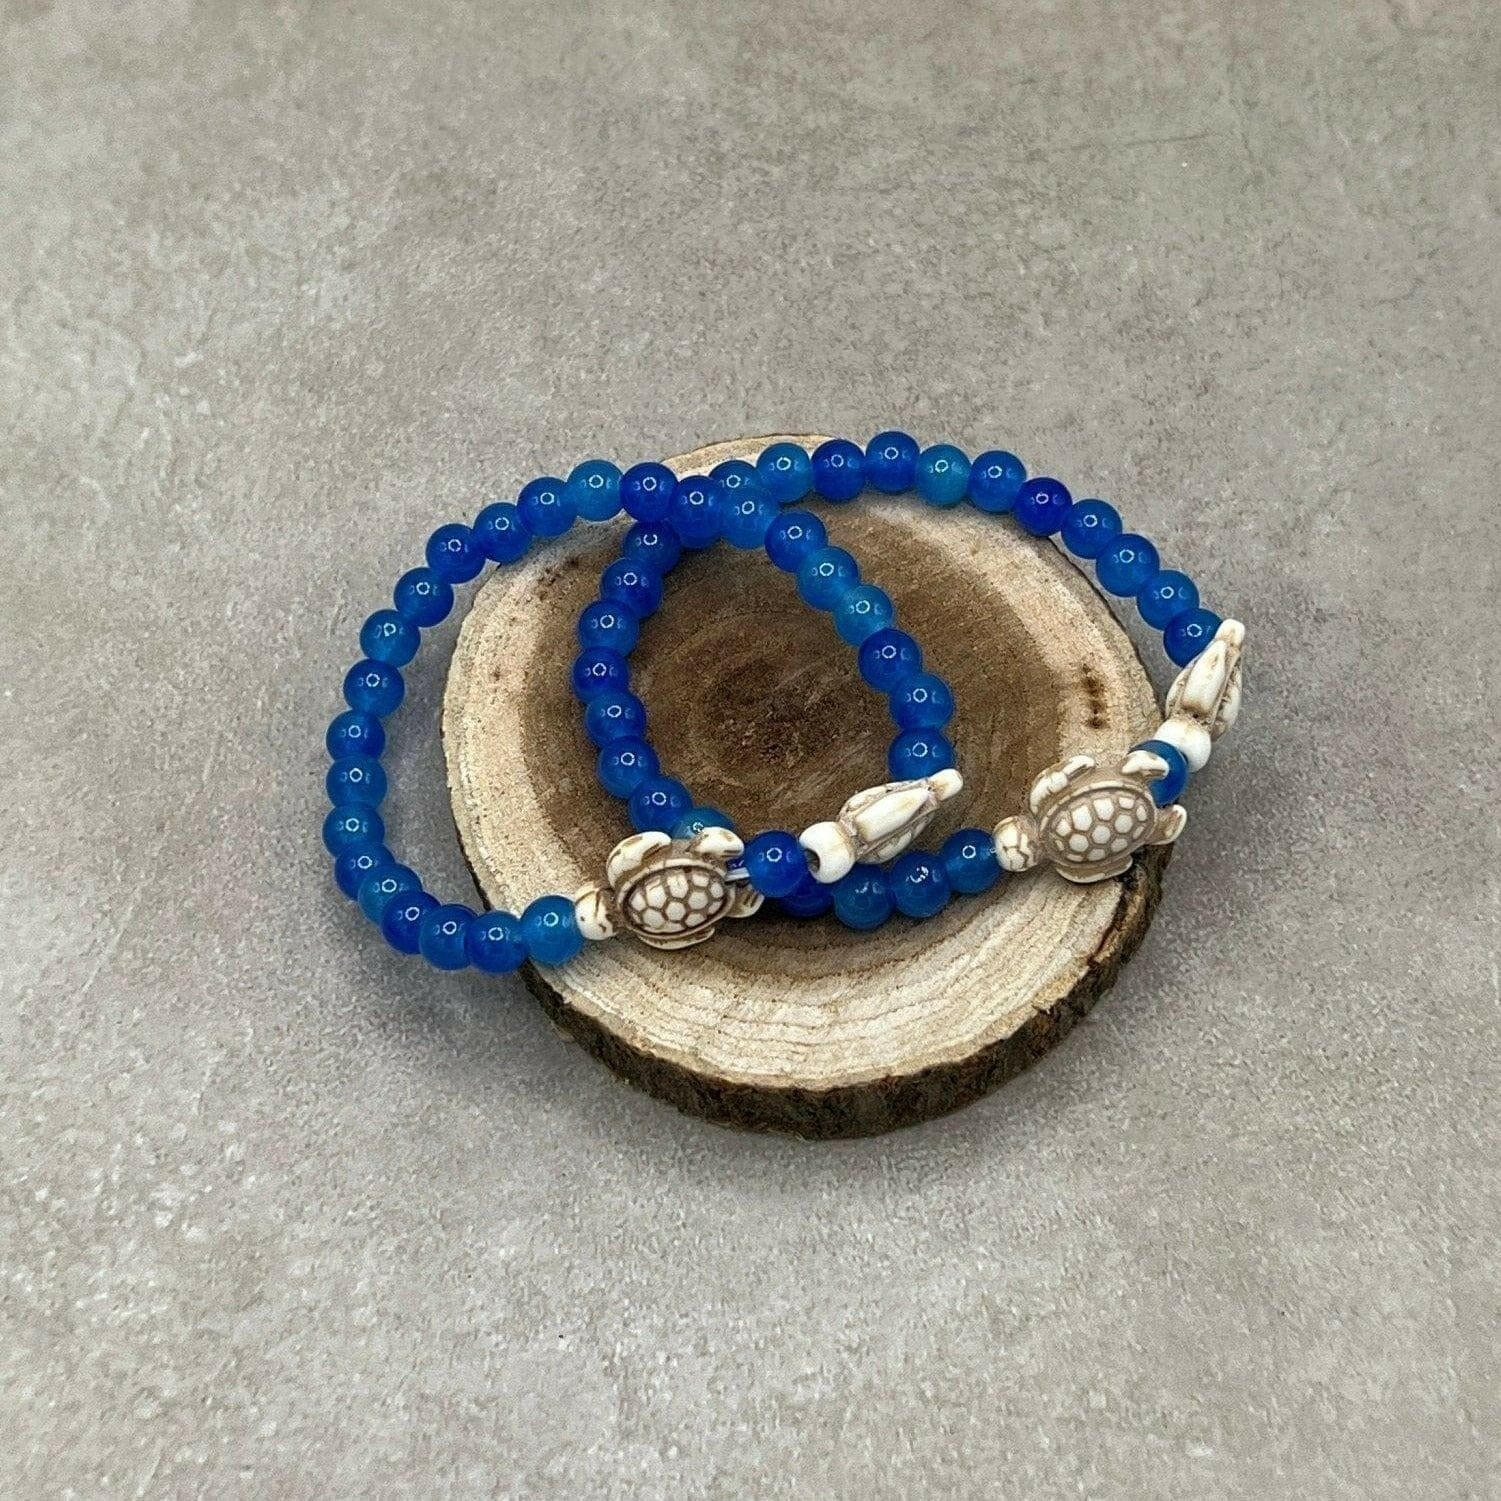 Bec Sue Jewelry Shop turtle bracelet 6.5 / blue / ceramic turtle/blue glass beads One-of-a-kind Blue Turtle Gemstone Beaded Bracelet, Turtle Bracelet, Tags 522